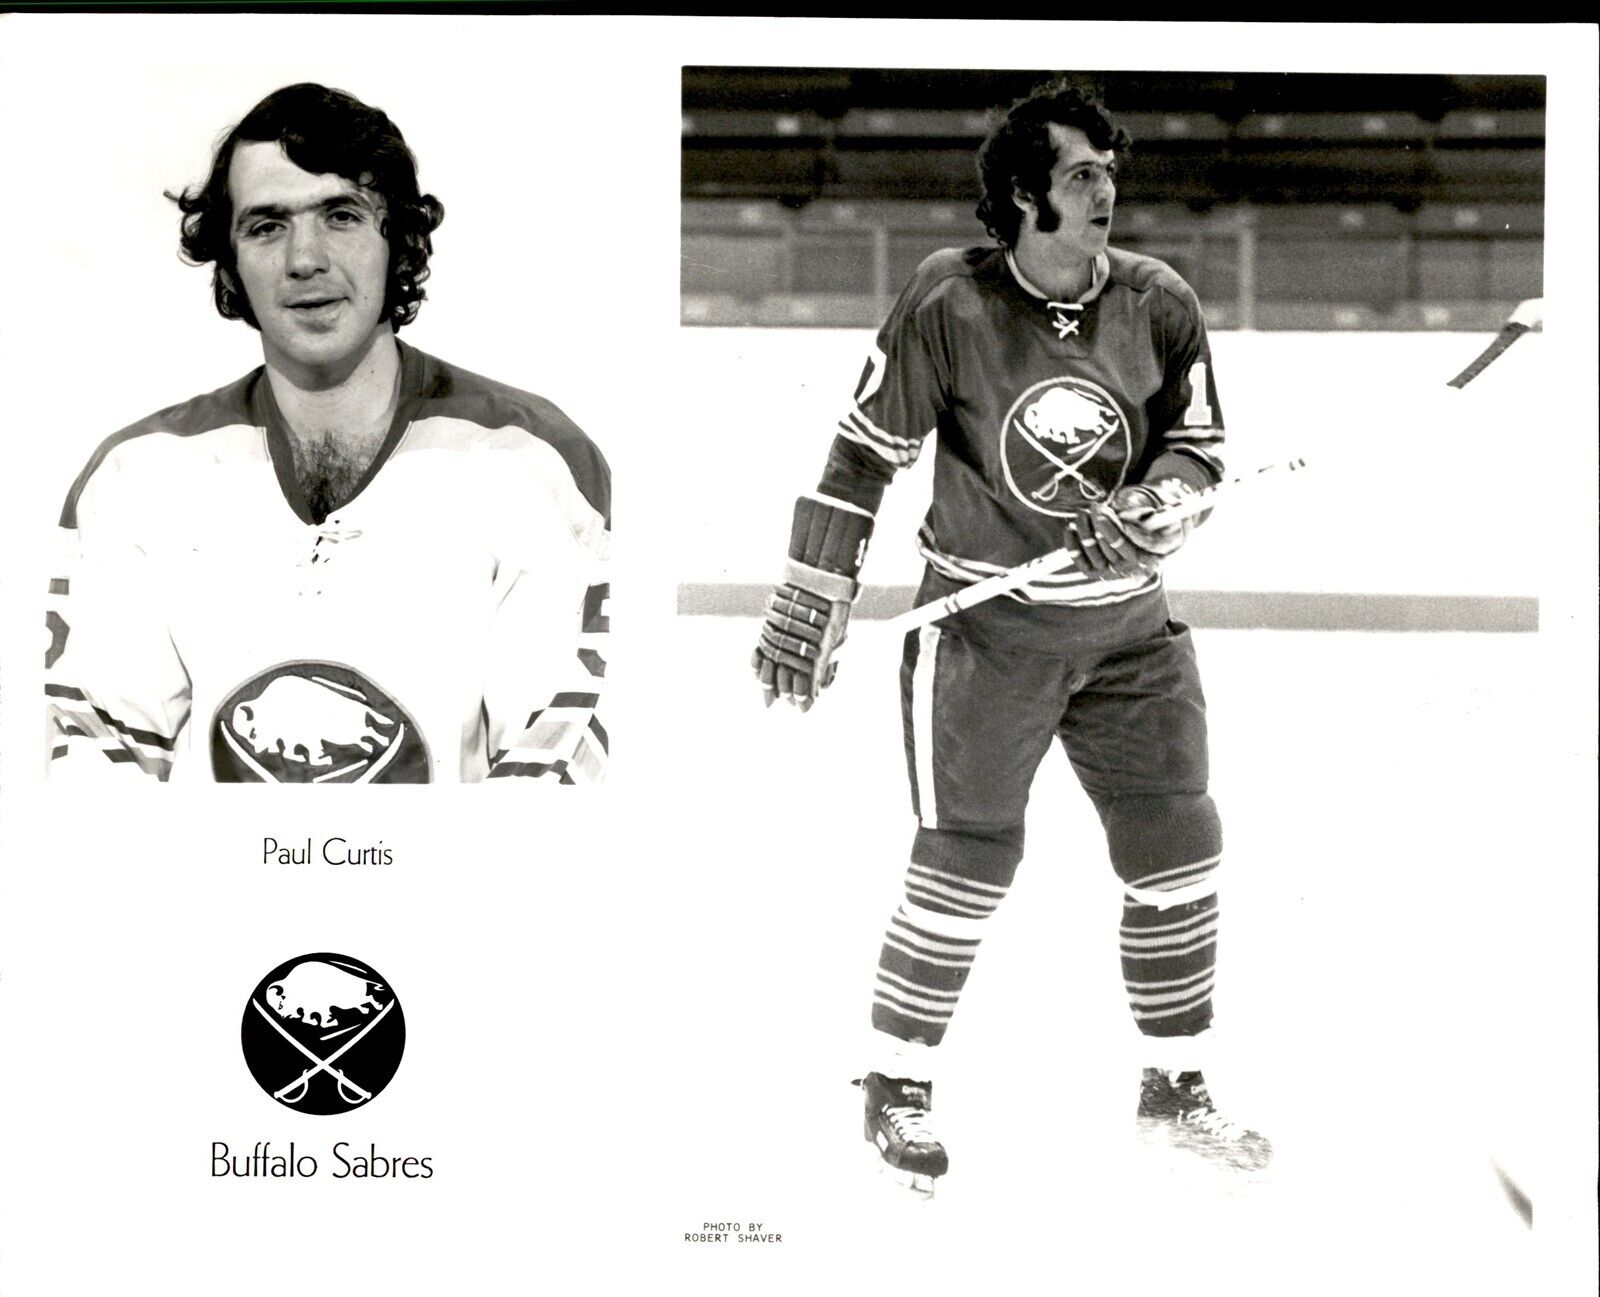 PF10 Original Robert Shaver Photo PAUL CURTIS BUFFALO SABRES NHL HOCKEY DEFENSE